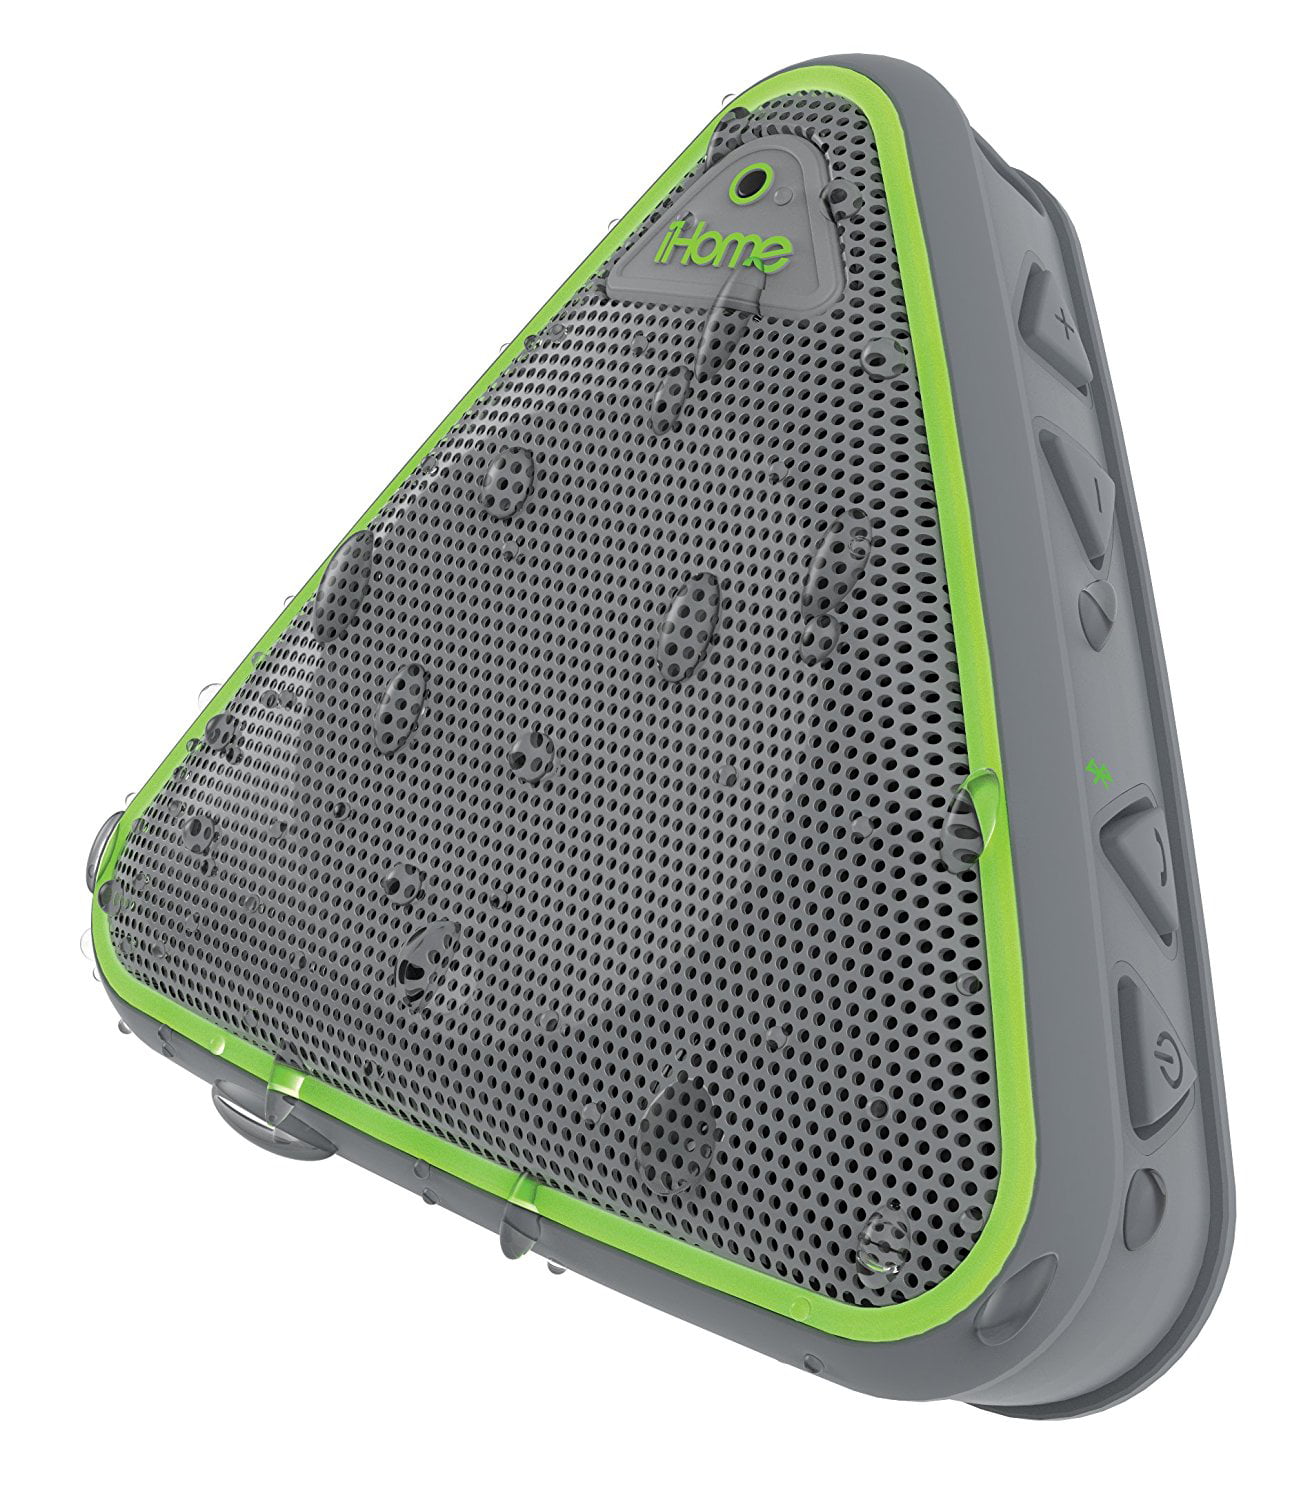 ihome splashproof bluetooth speaker system